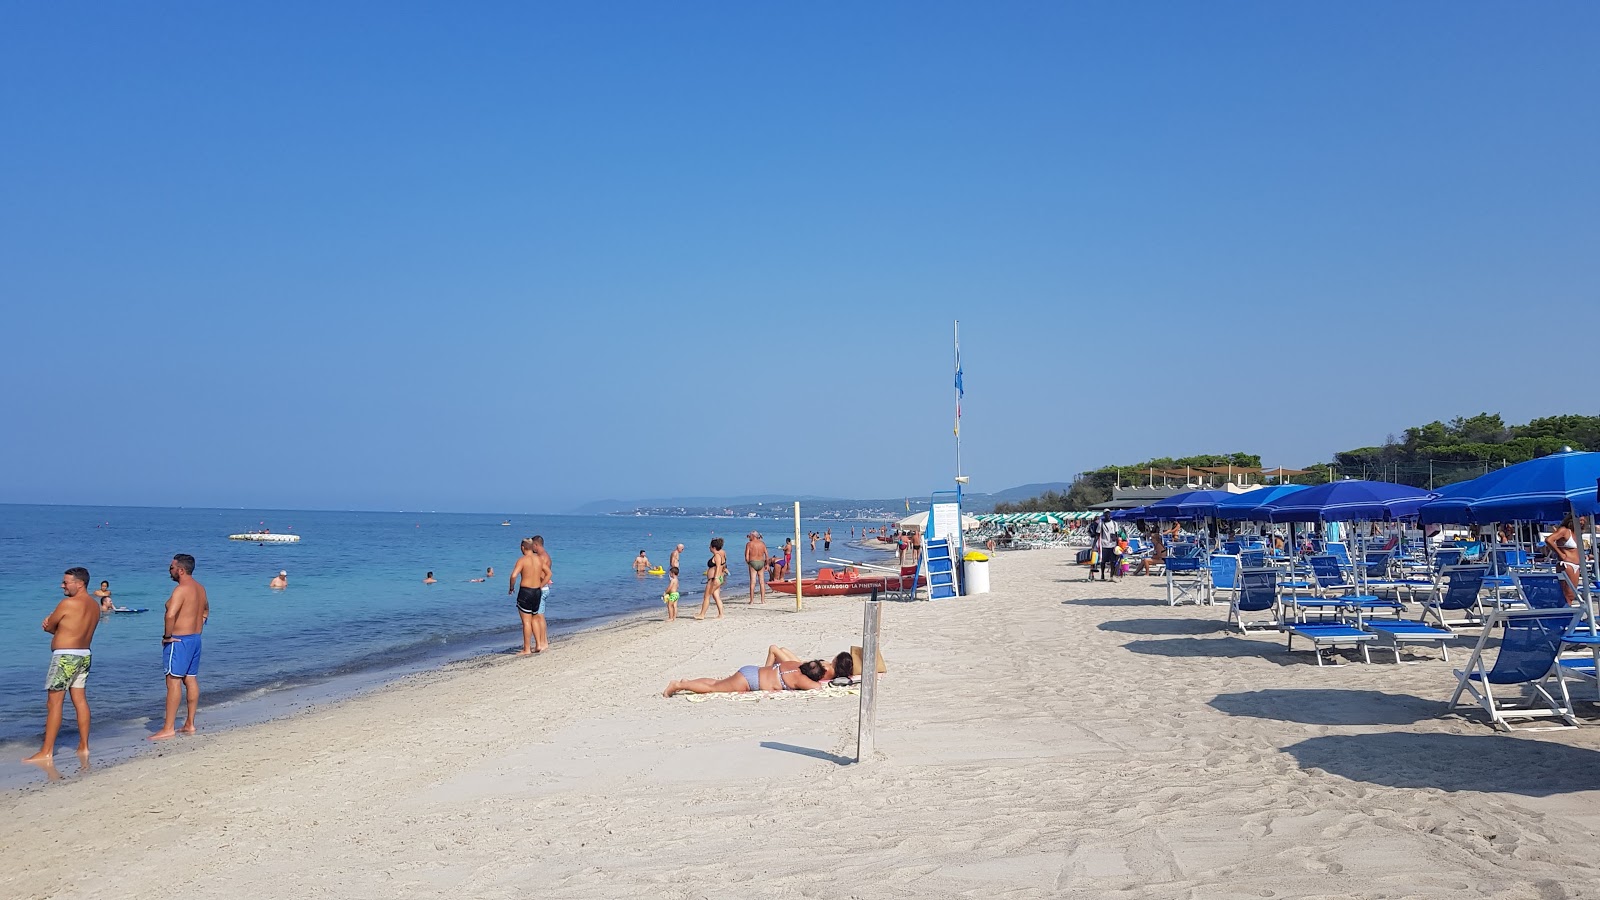 Spiaggia Pietrabianca'in fotoğrafı parlak ince kum yüzey ile